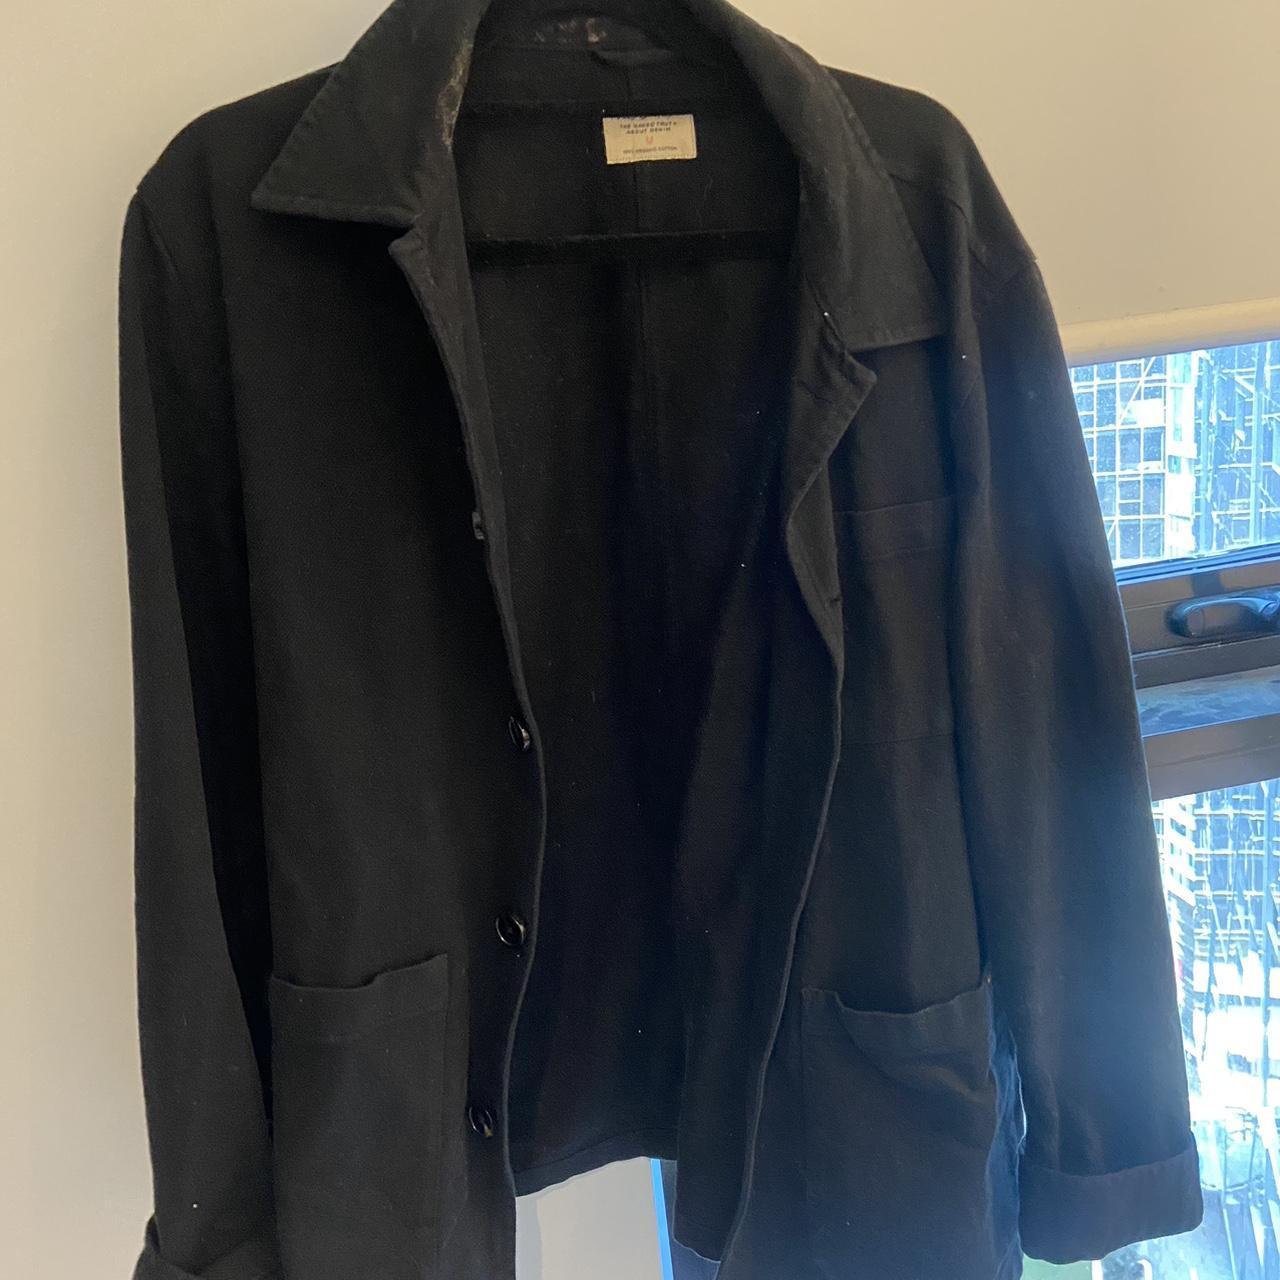 Nudie jean worker jacket, barely worn as it doesn’t... - Depop